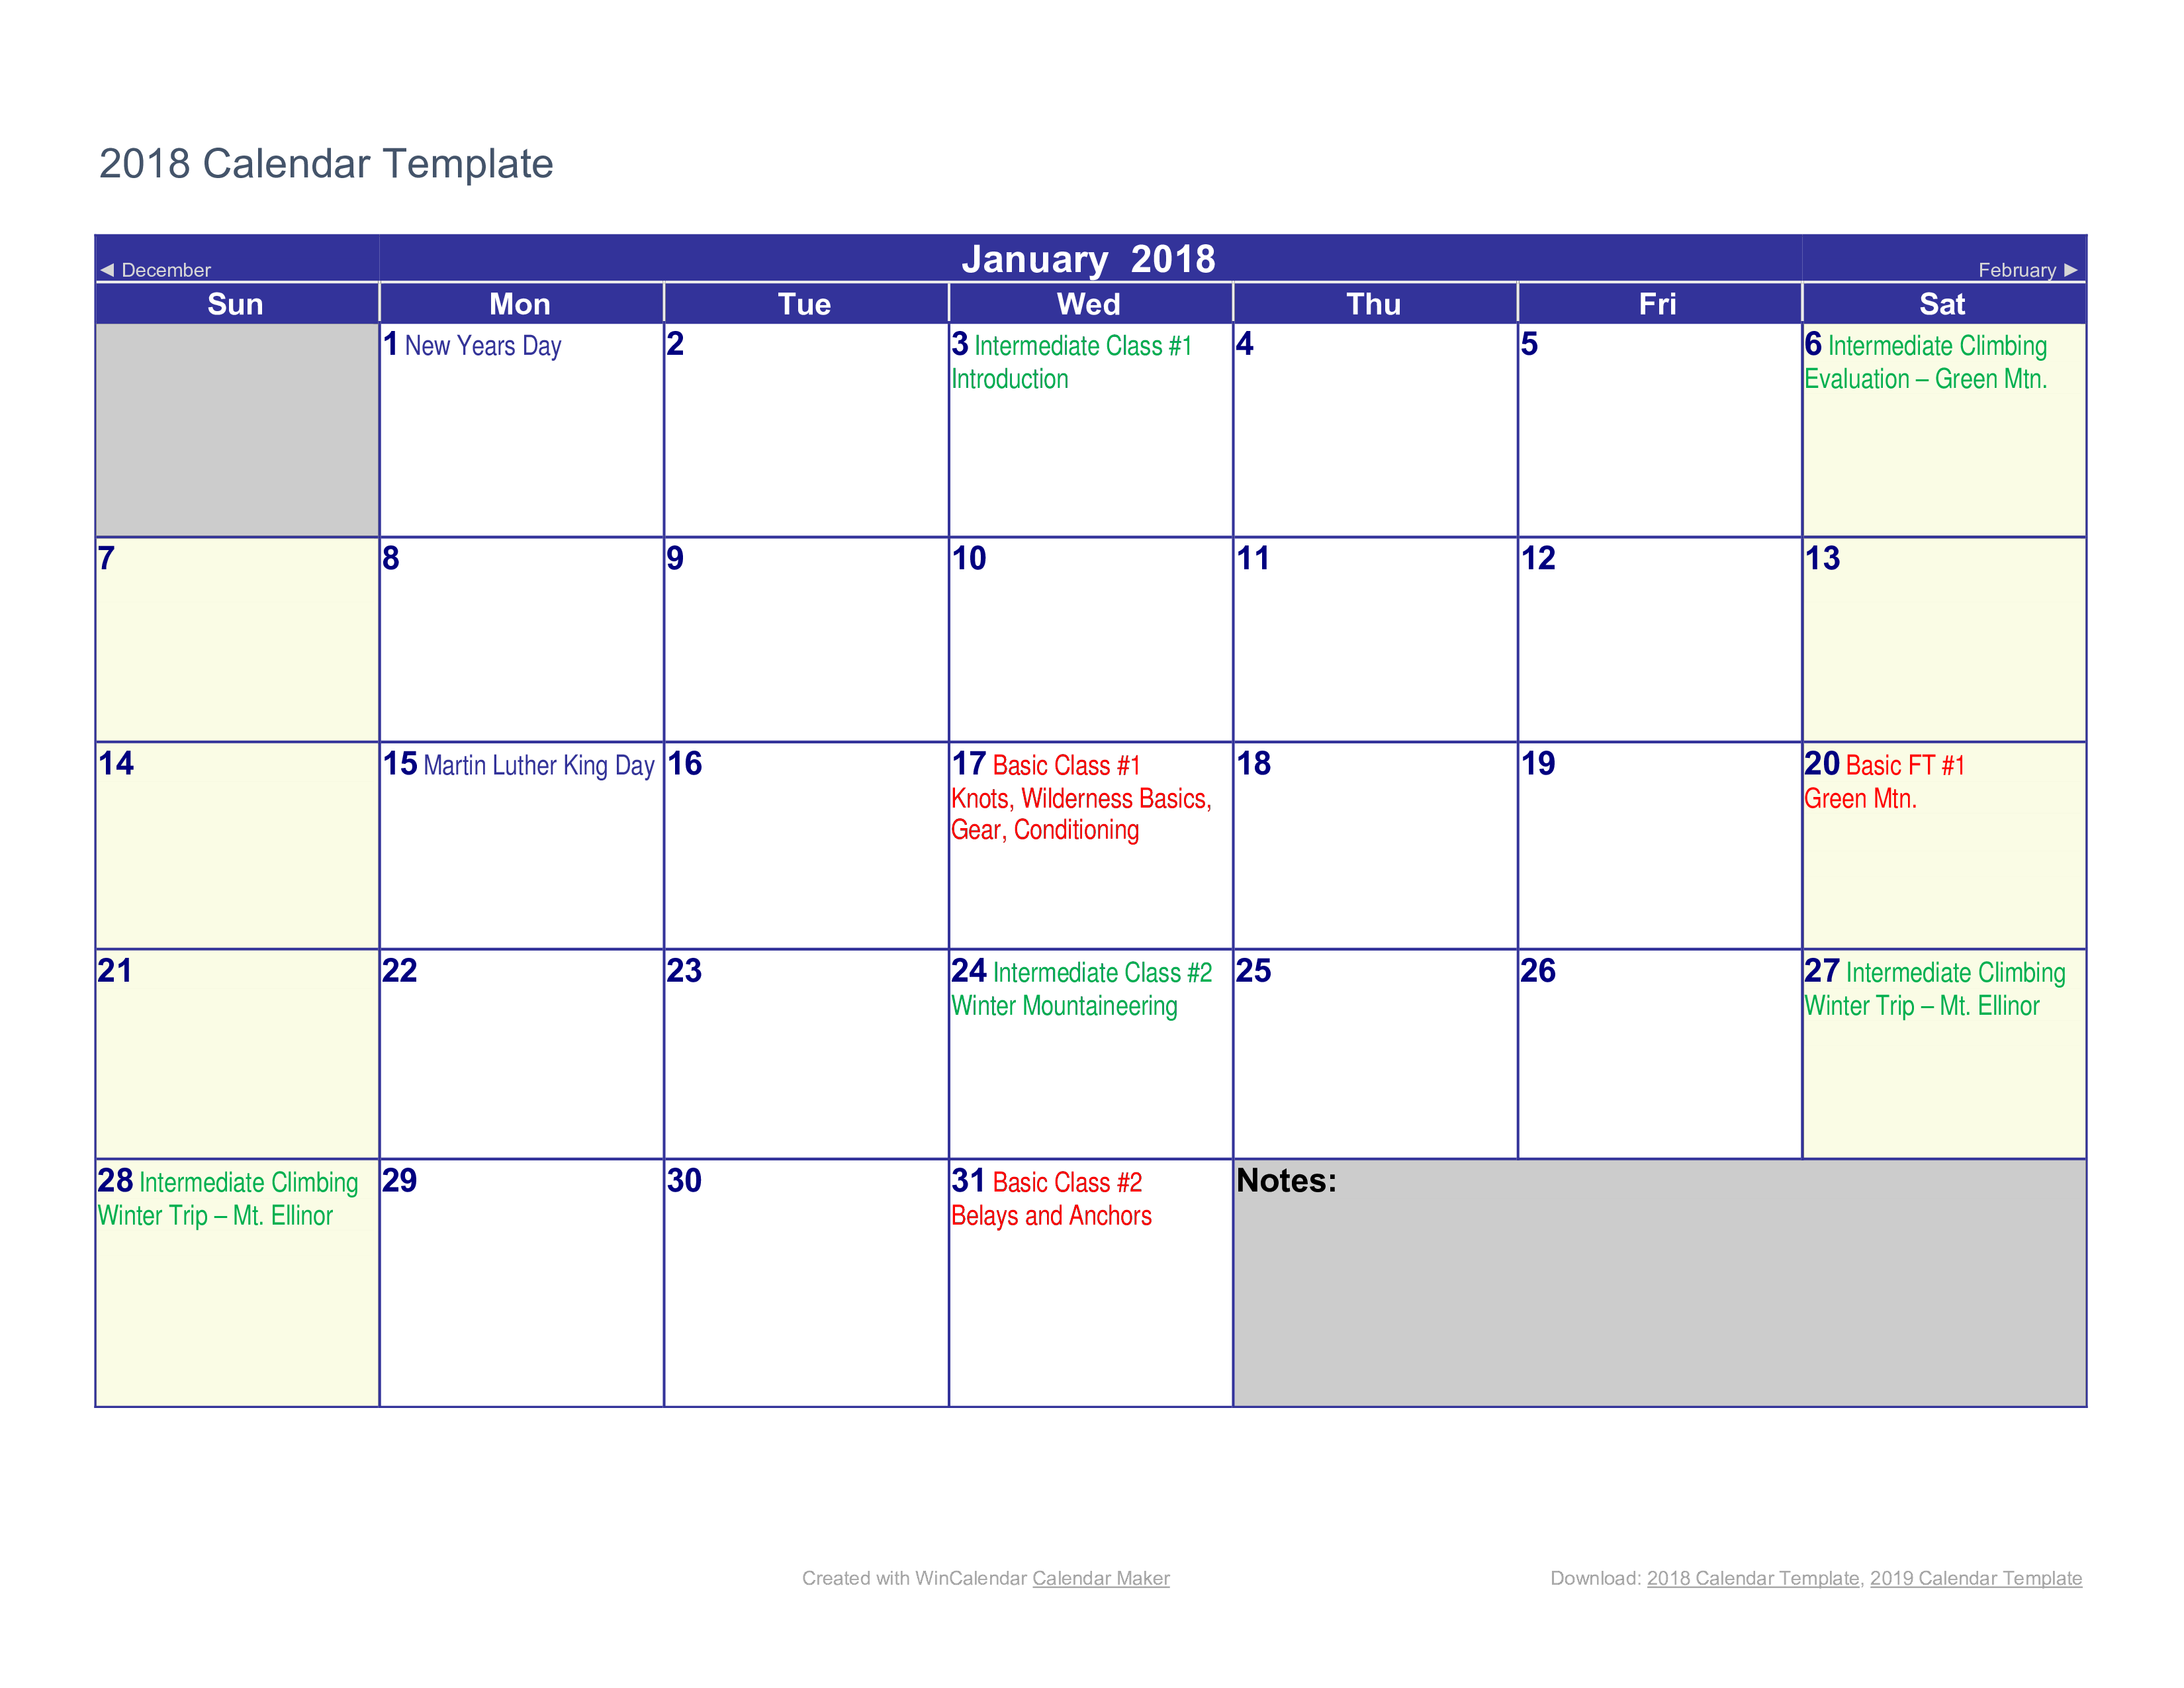 Printable Calendar example Templates at